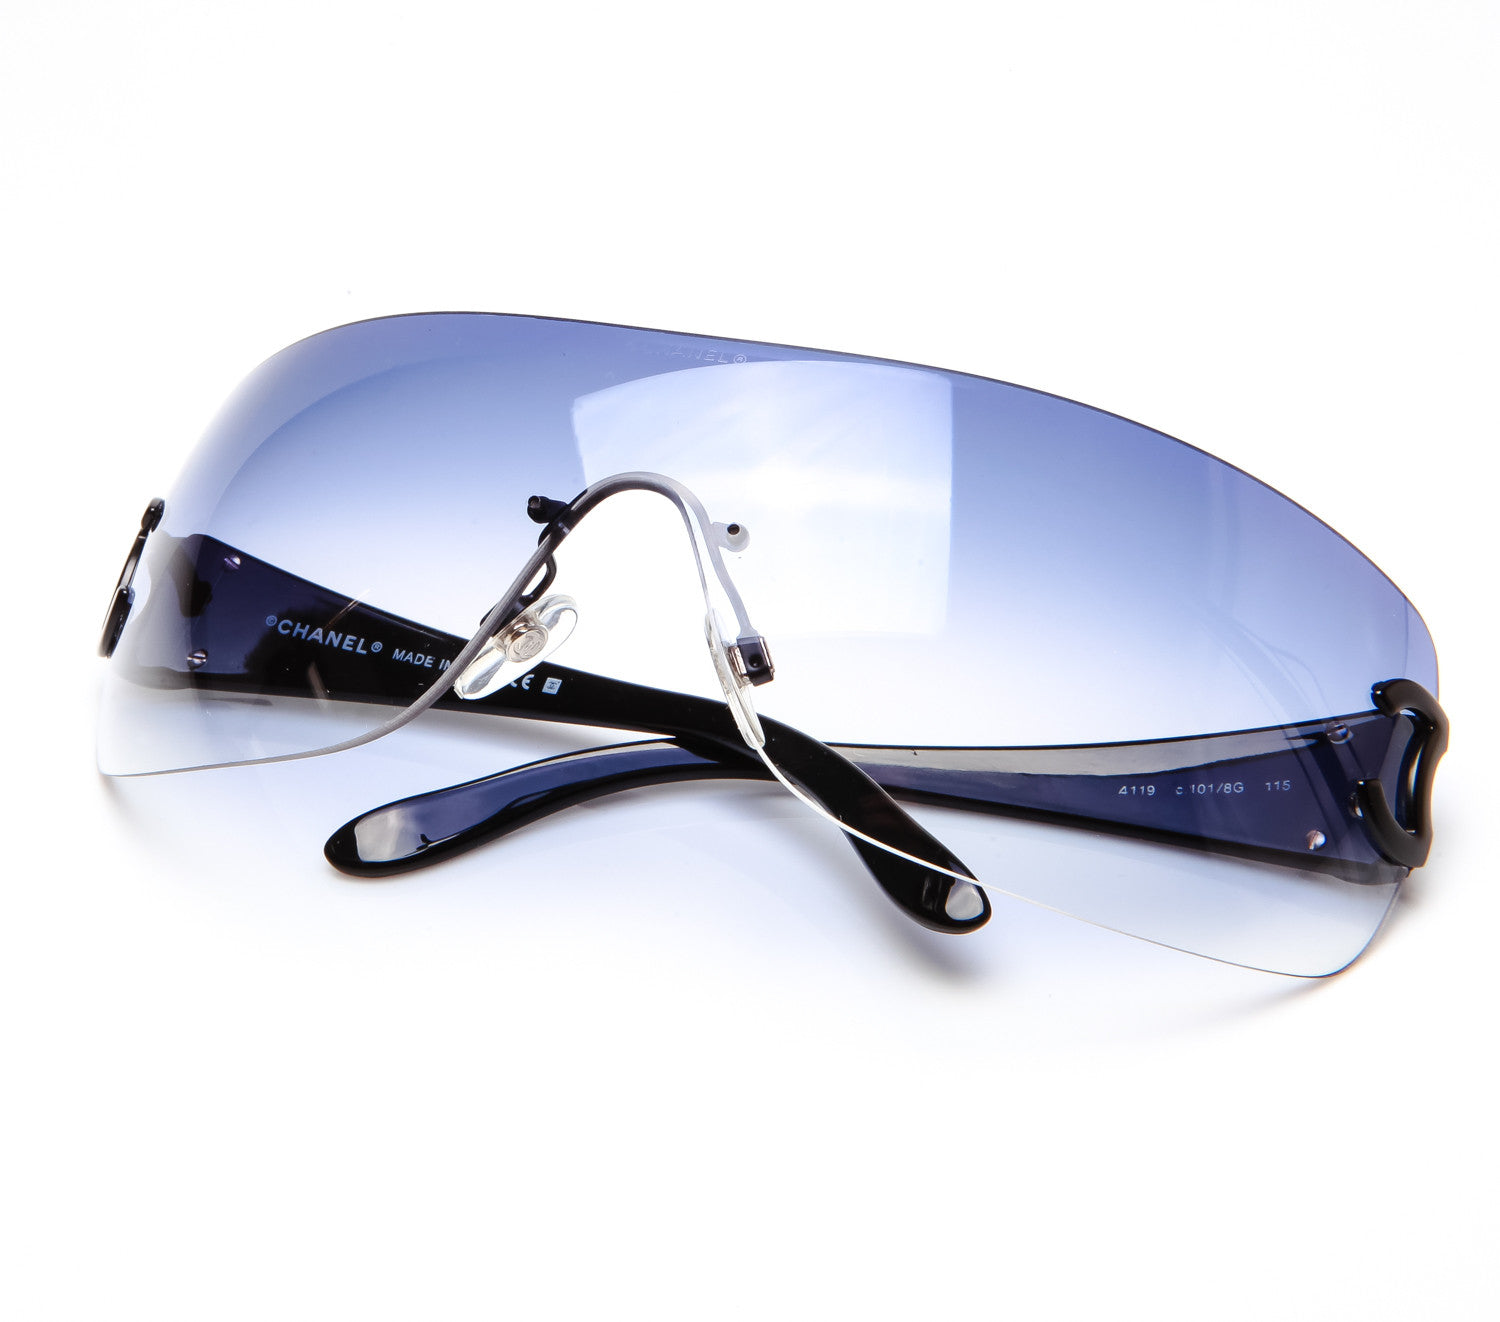 CHANEL, Accessories, Chanel 531 513c Perle Collection Sunglasses